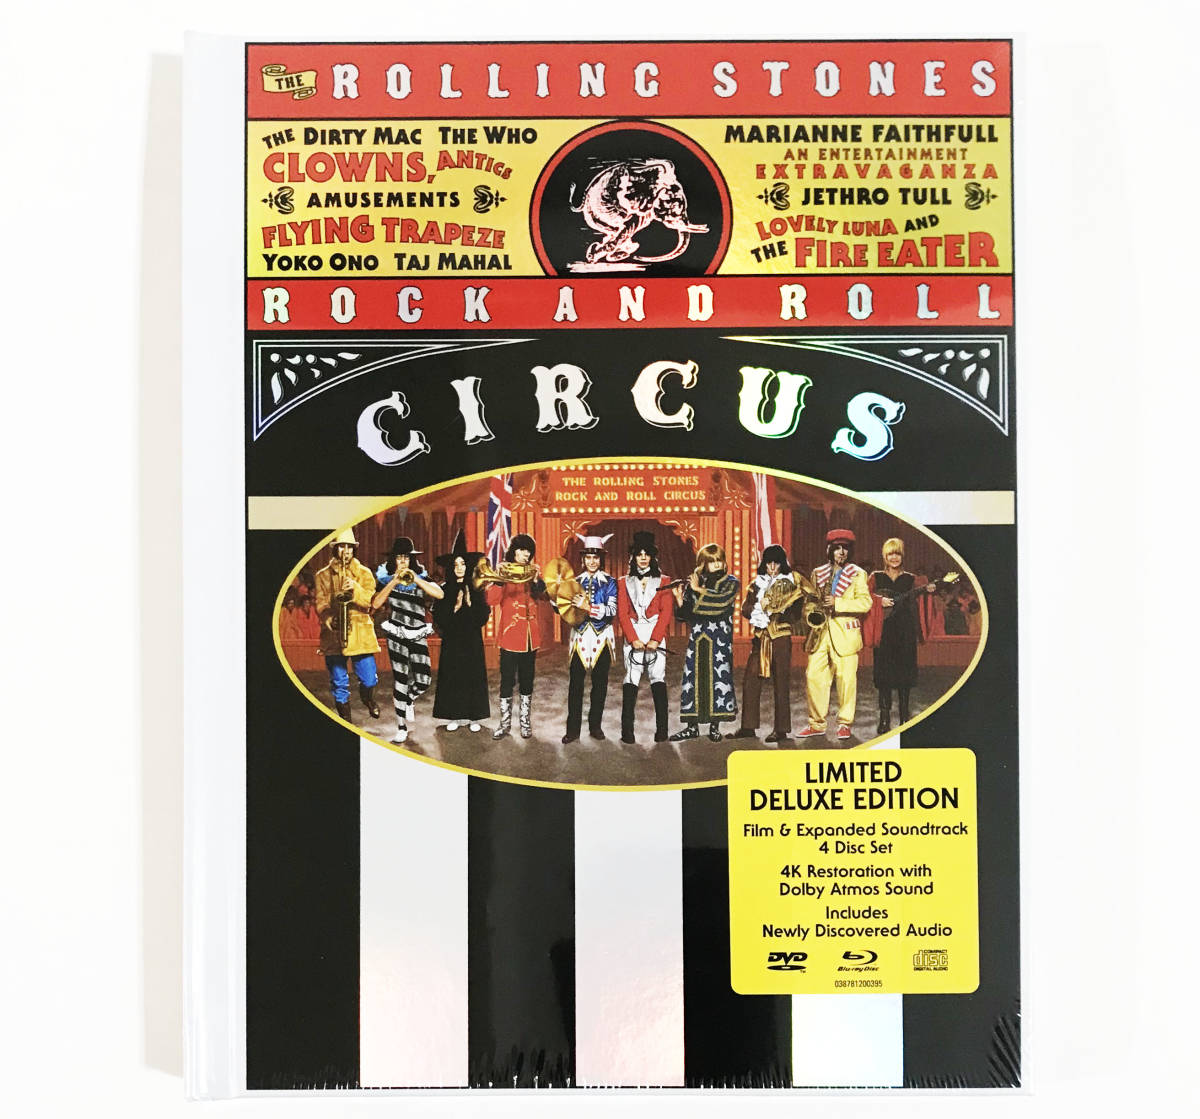 [ бесплатная доставка!]The Rolling Stones The * low кольцо * Stone z[Rock And Roll Circus] импорт BD+DVD+2CD John * Lennon участие 